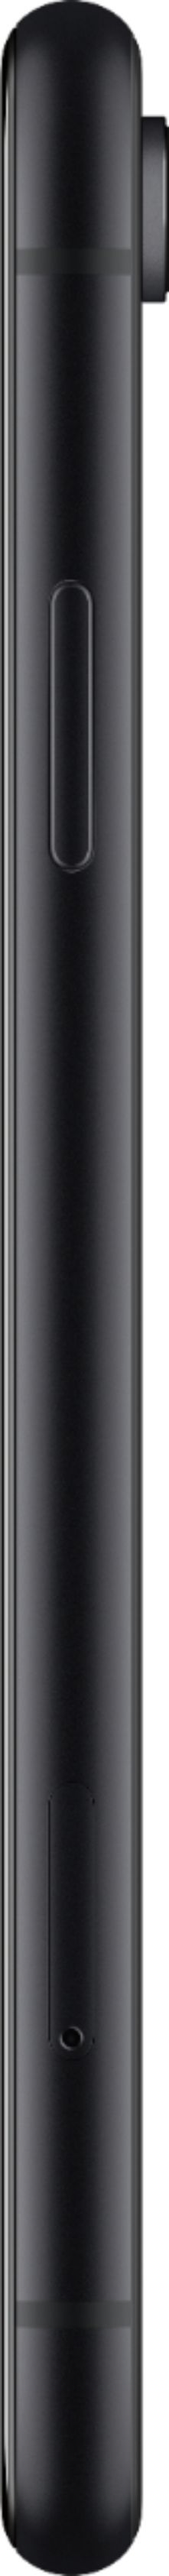 Customer Reviews: Apple iPhone XR 128GB Black (Verizon) MRYY2LL/A ...